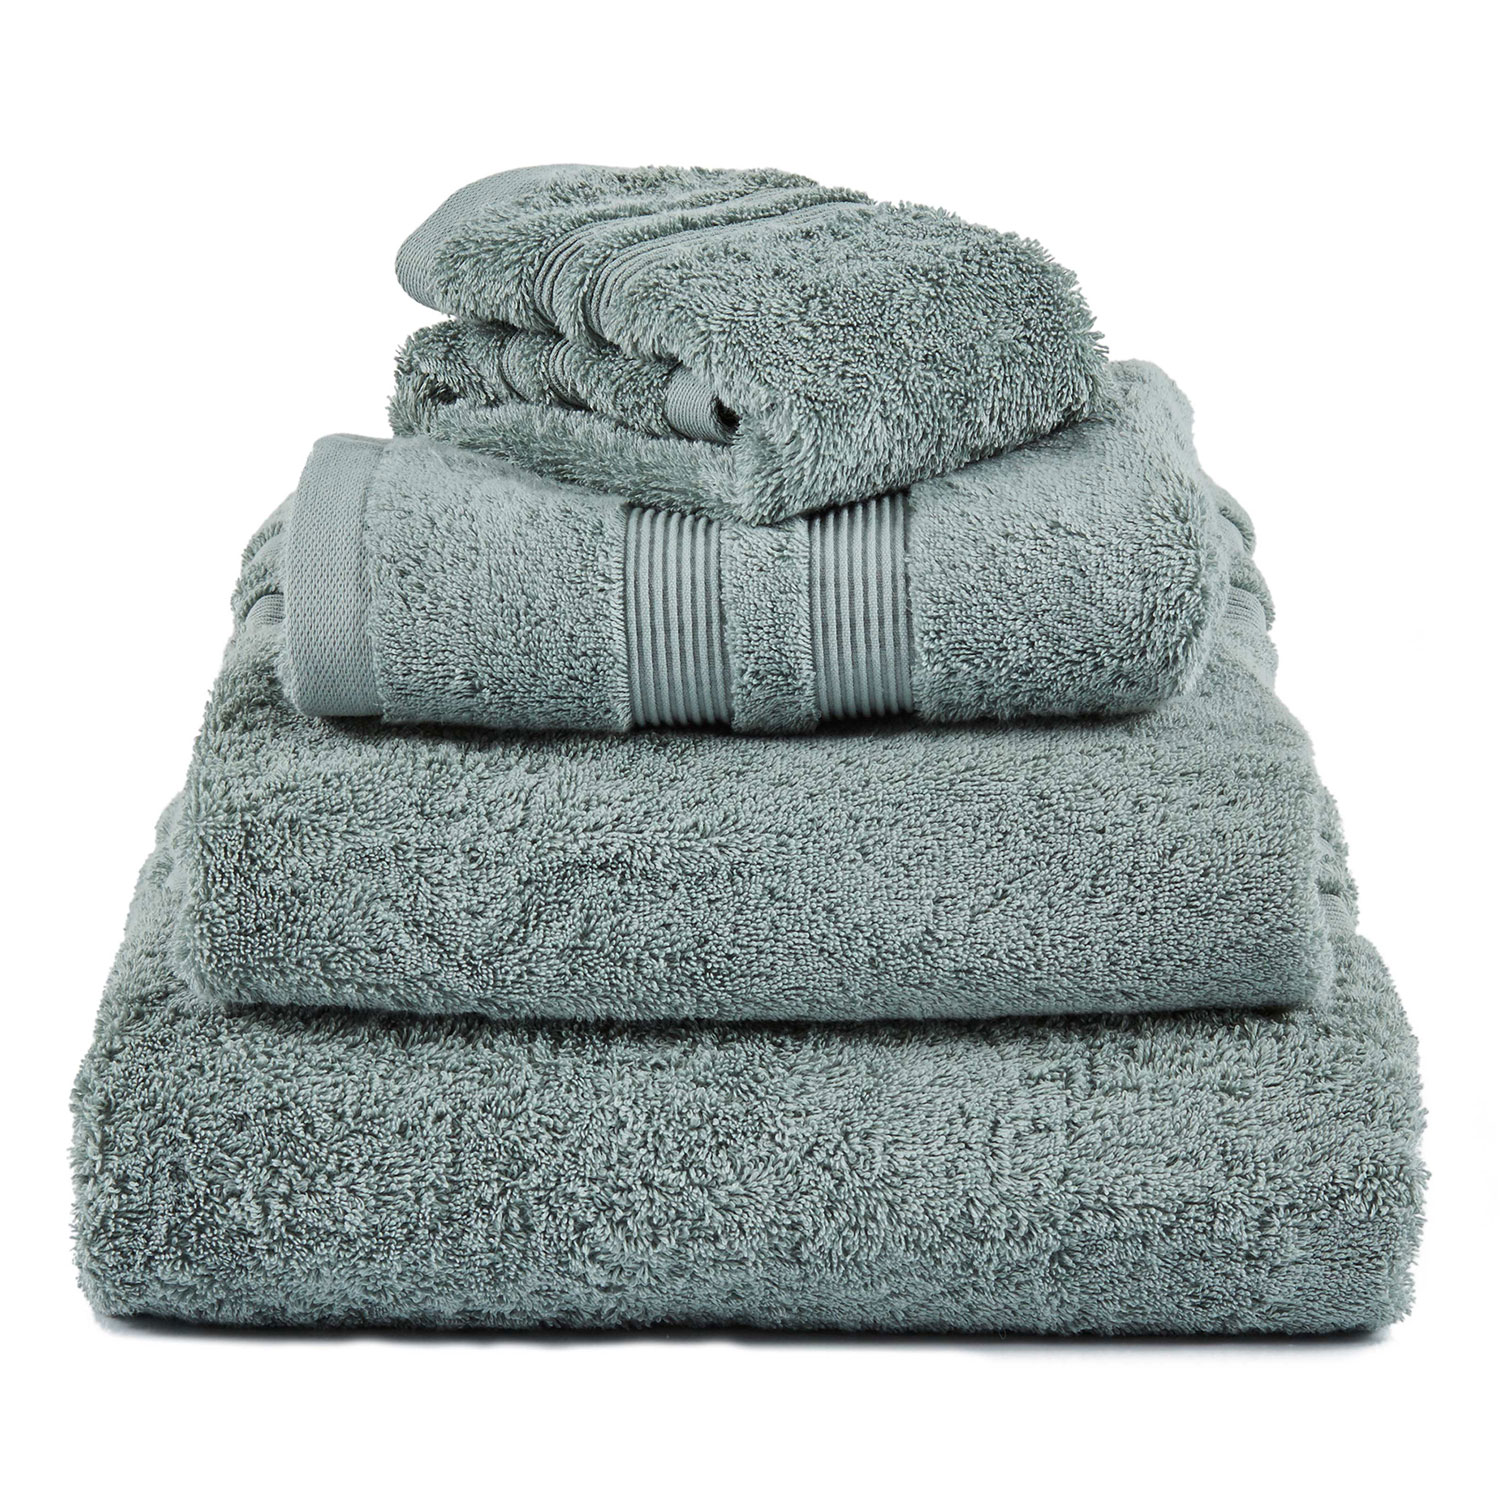 Mille Notti Fontana Towel Eco 70x140 cm Light - Handtowels & Bathtowels Brown - 70001046-70140